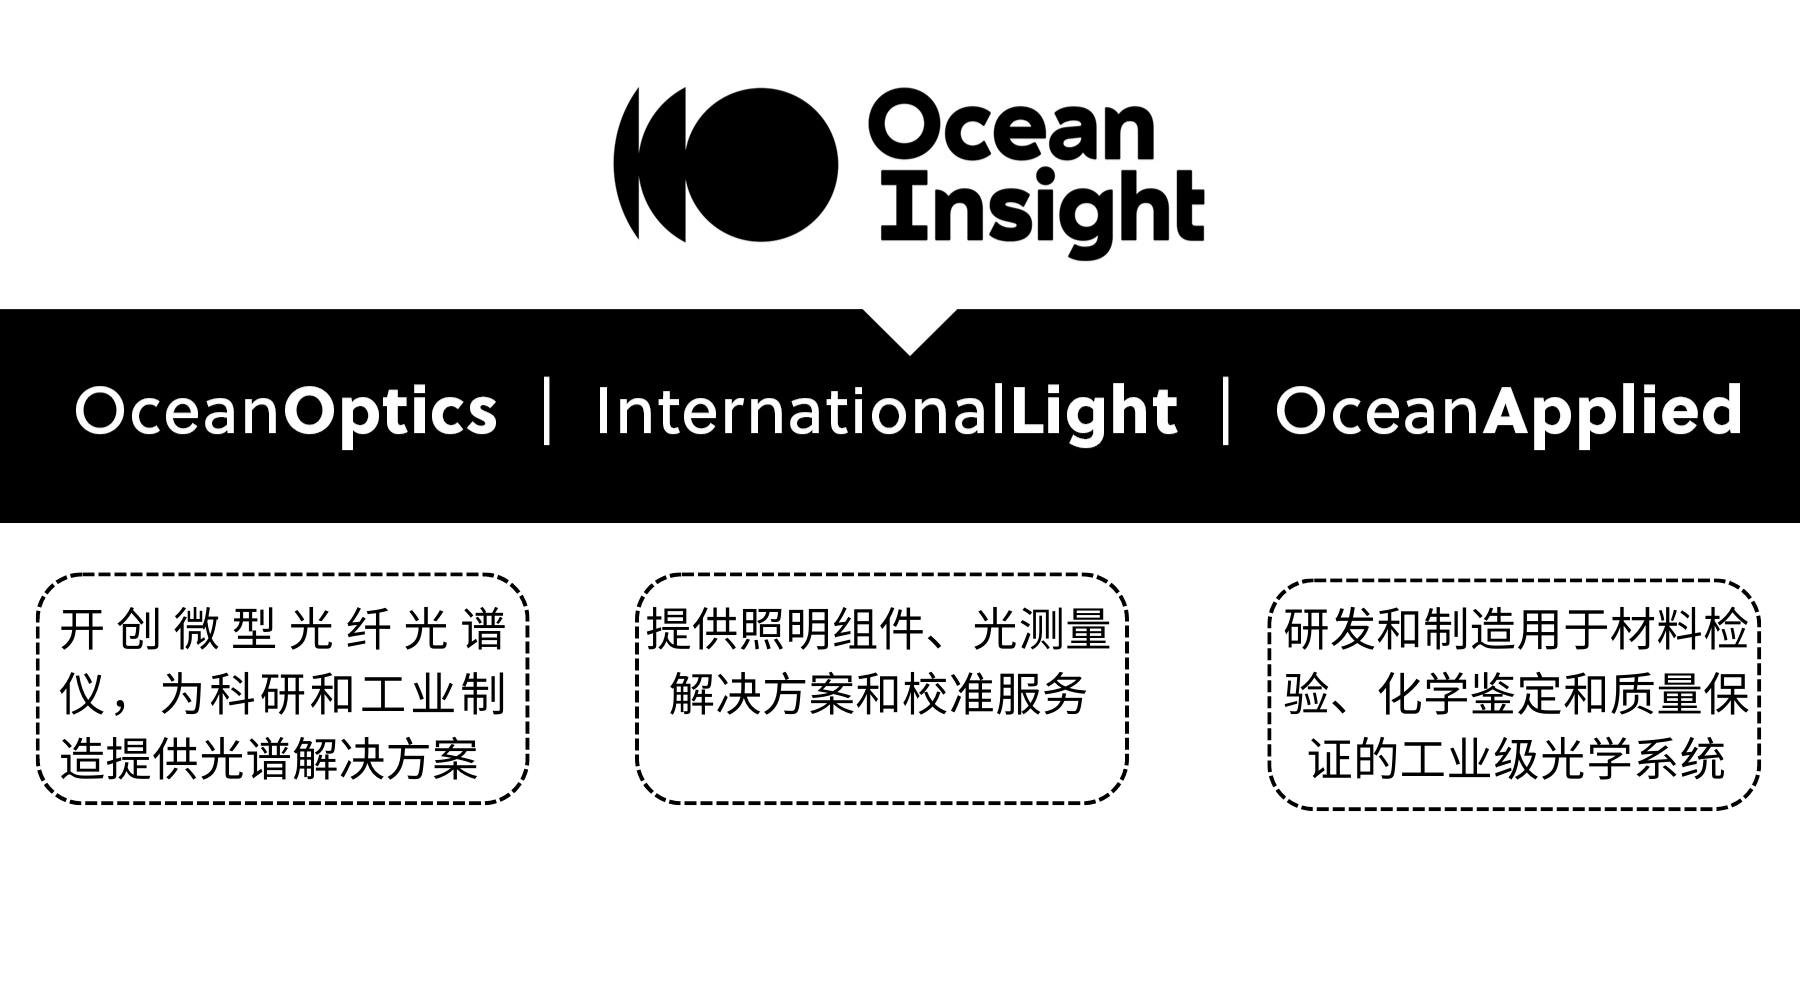 Ocean Insight三个子品牌Ocean Optics